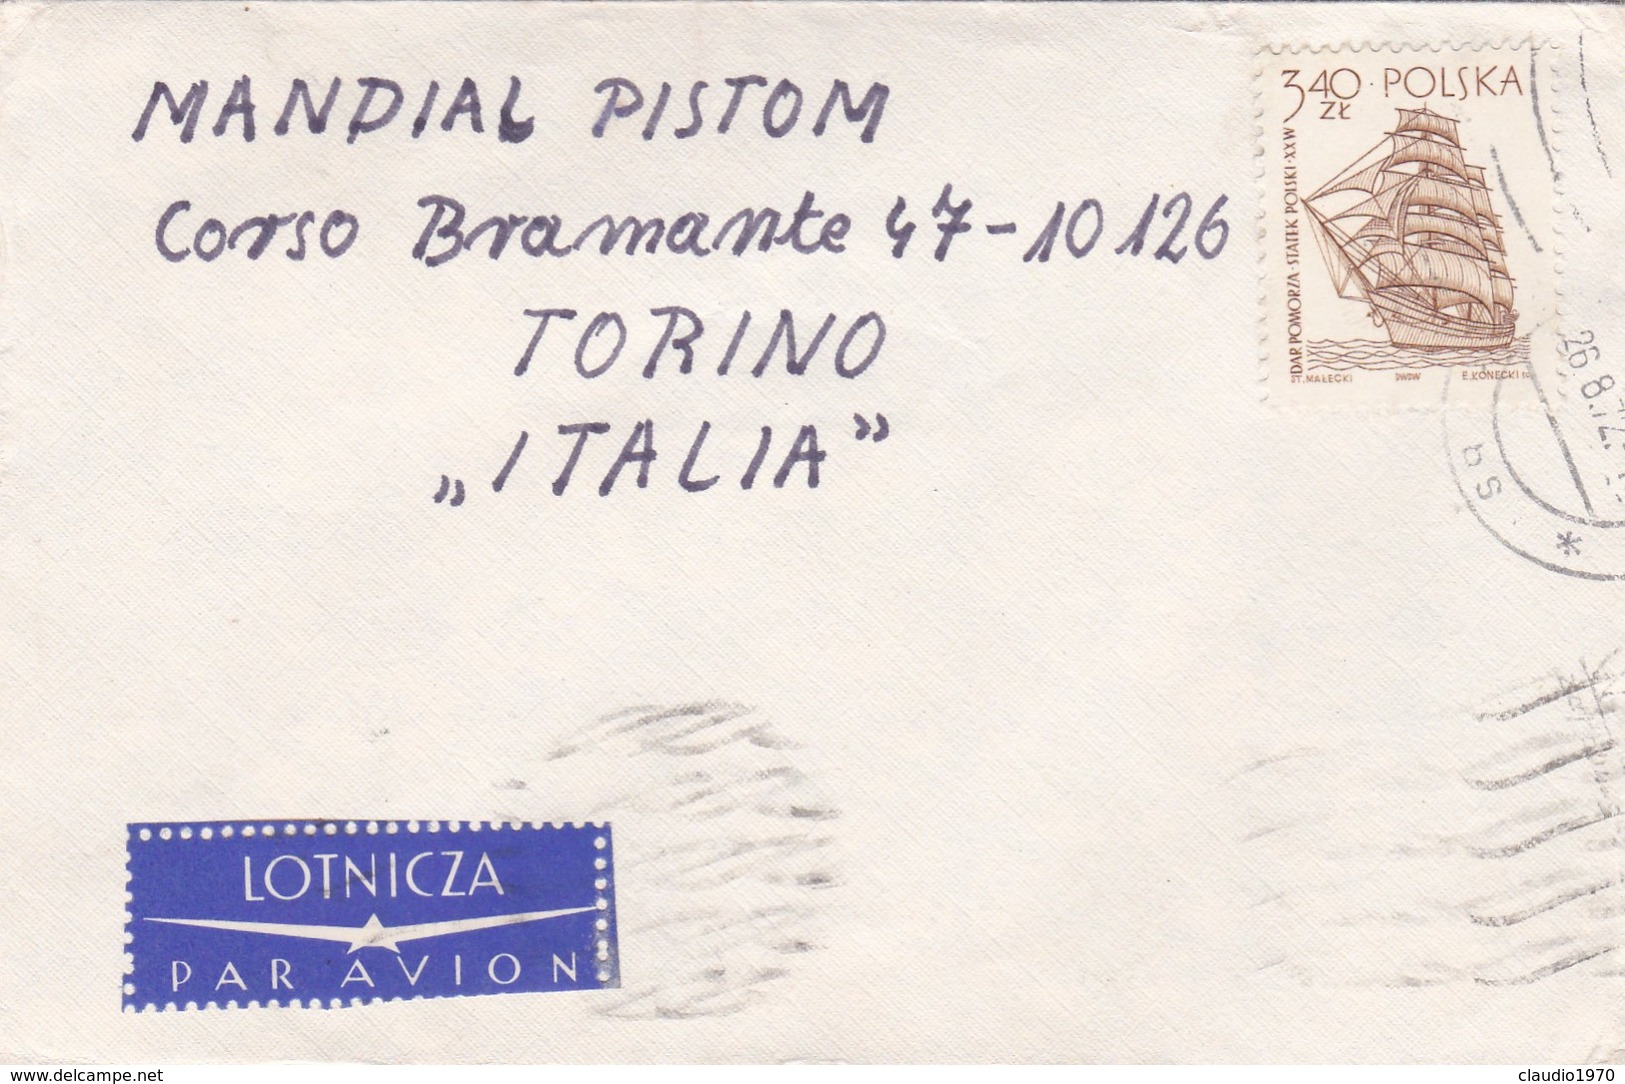 BUSTA VIAGGIATA PAR AVION - POLONIA  - VIAGGIATA PER MONDIAL PISTON -TORINO / ITALIA - Storia Postale